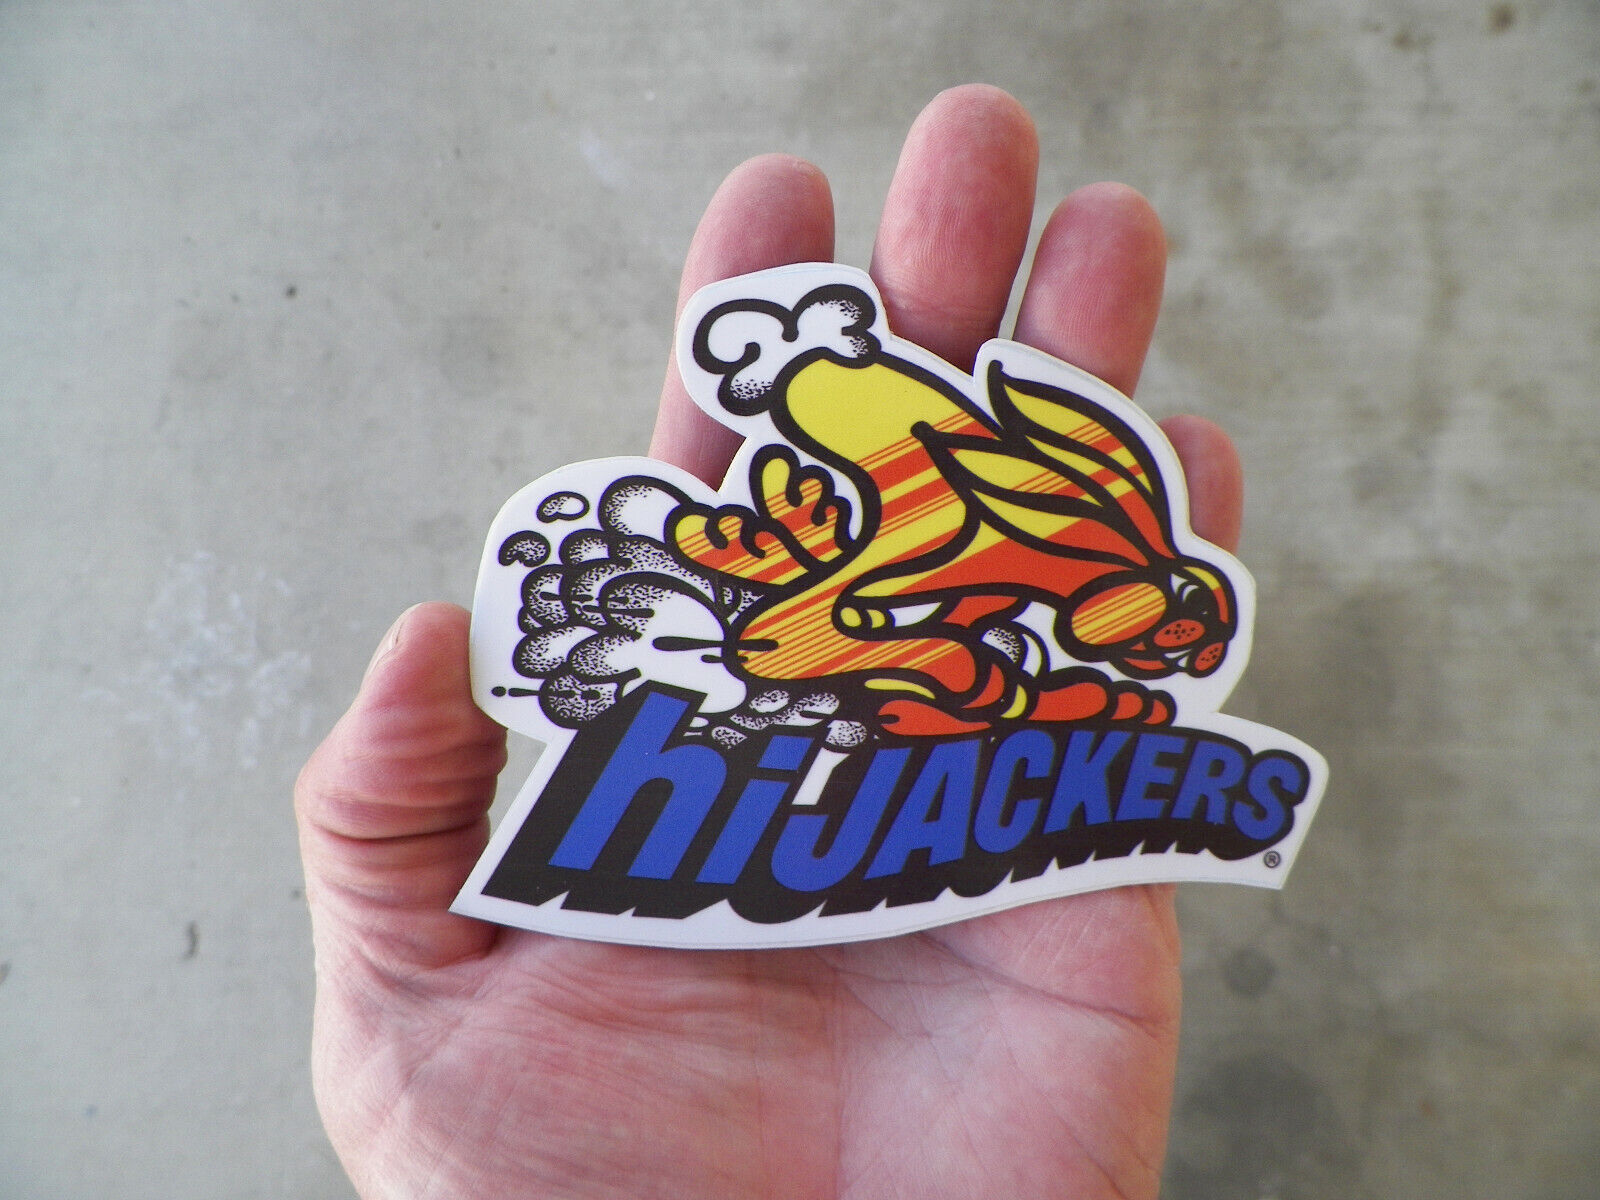 HiJackers (Highjackers) Shock Absorber Drag Racing Sticker/Decal